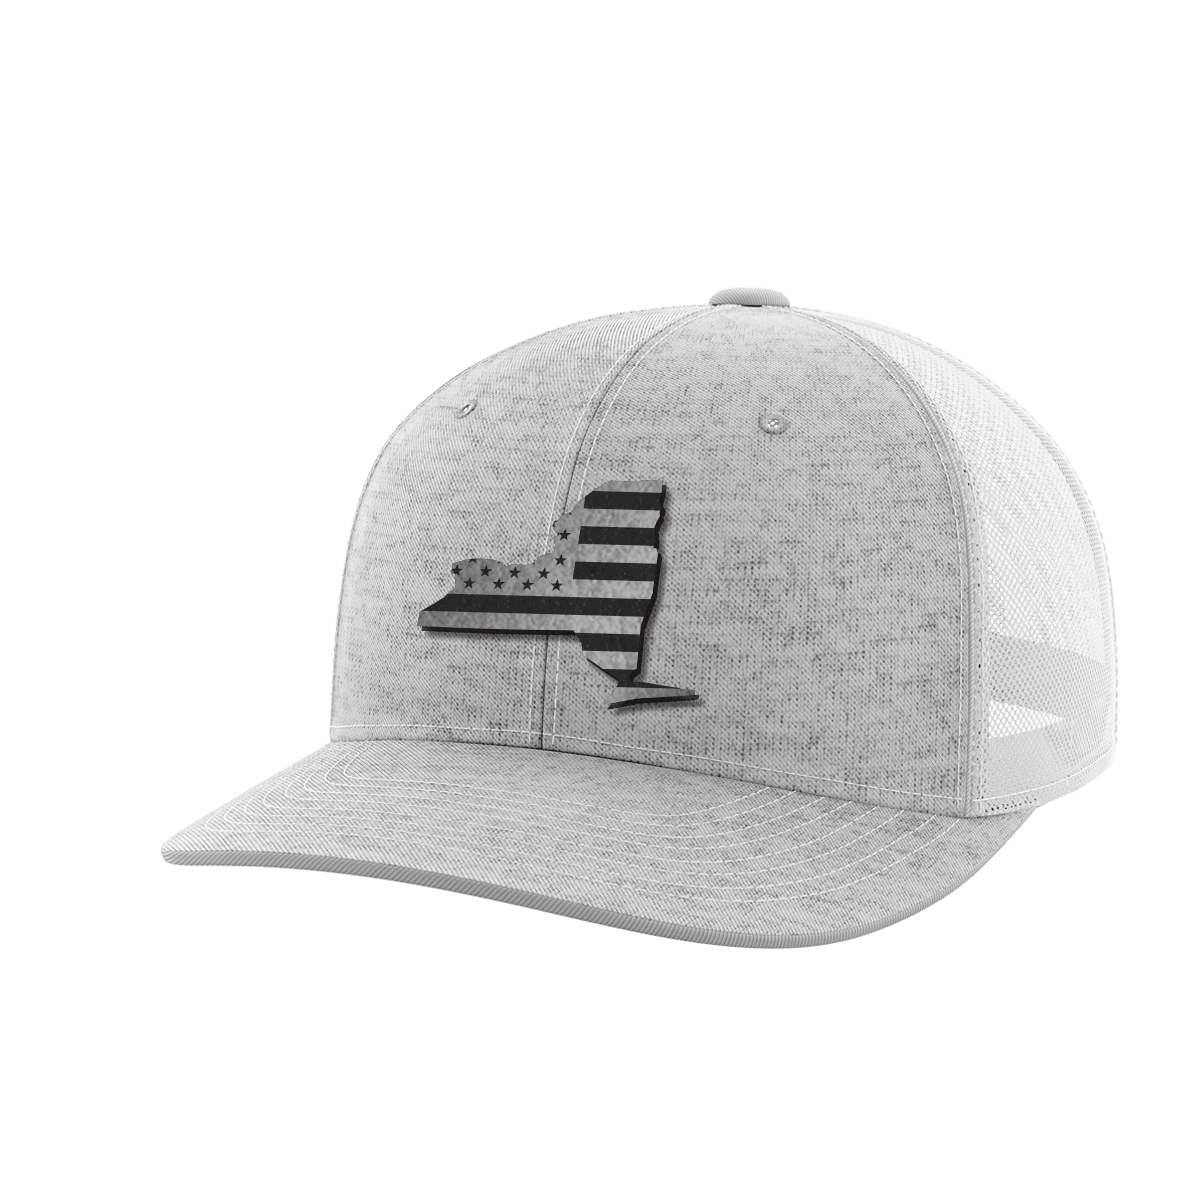 New York United Hats - Greater Half